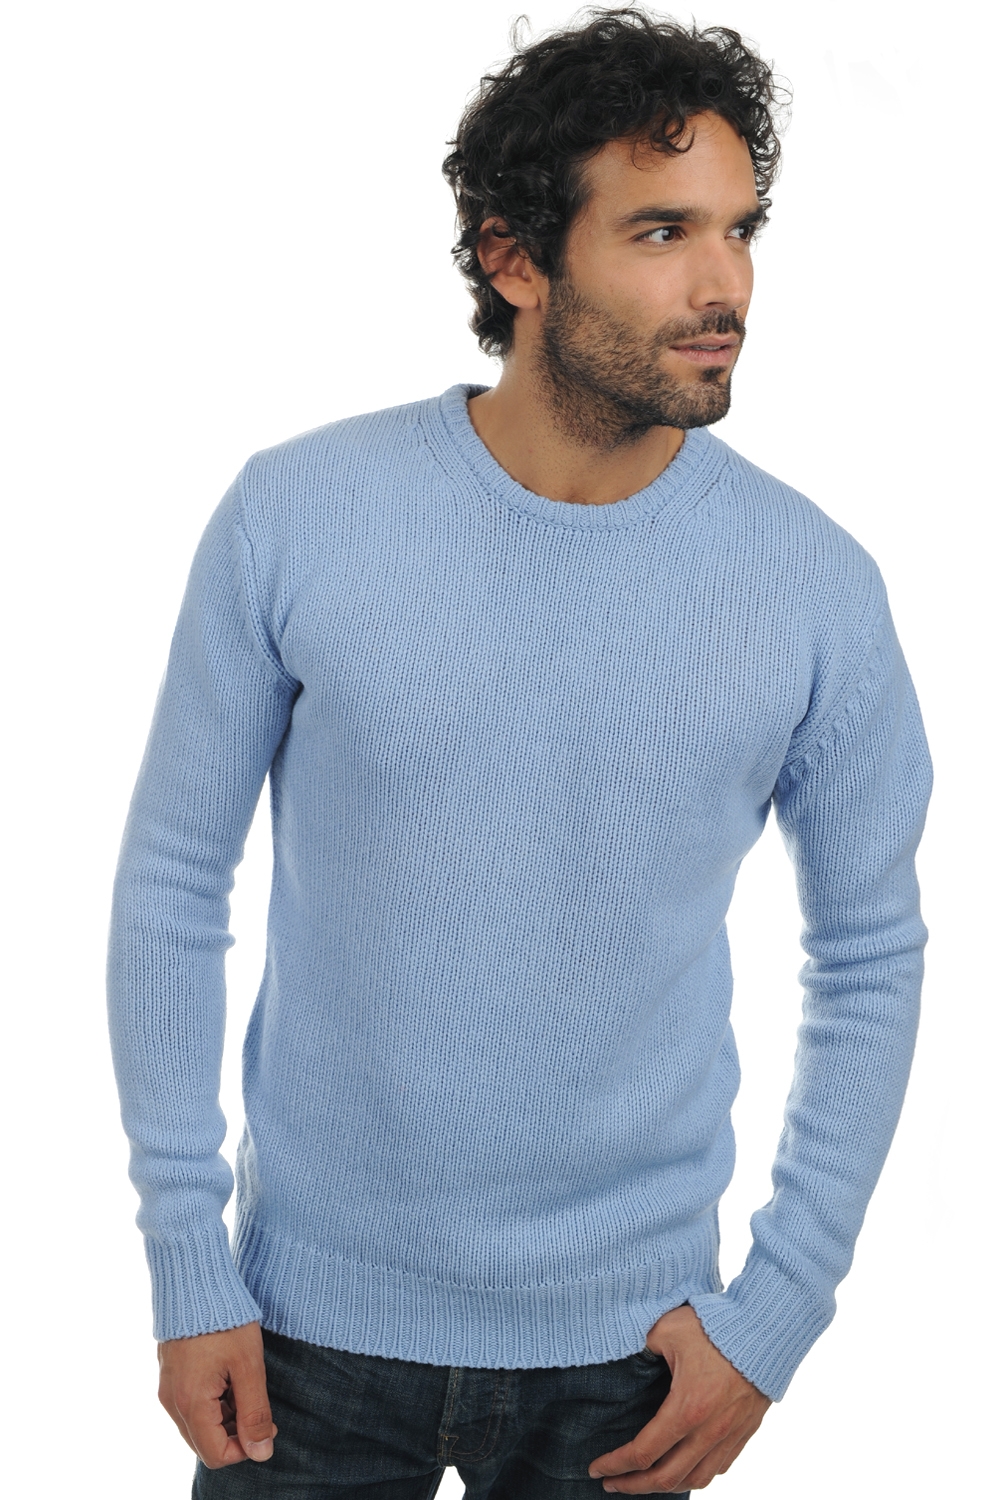 Yak men chunky sweater ivan sky blue 2xl